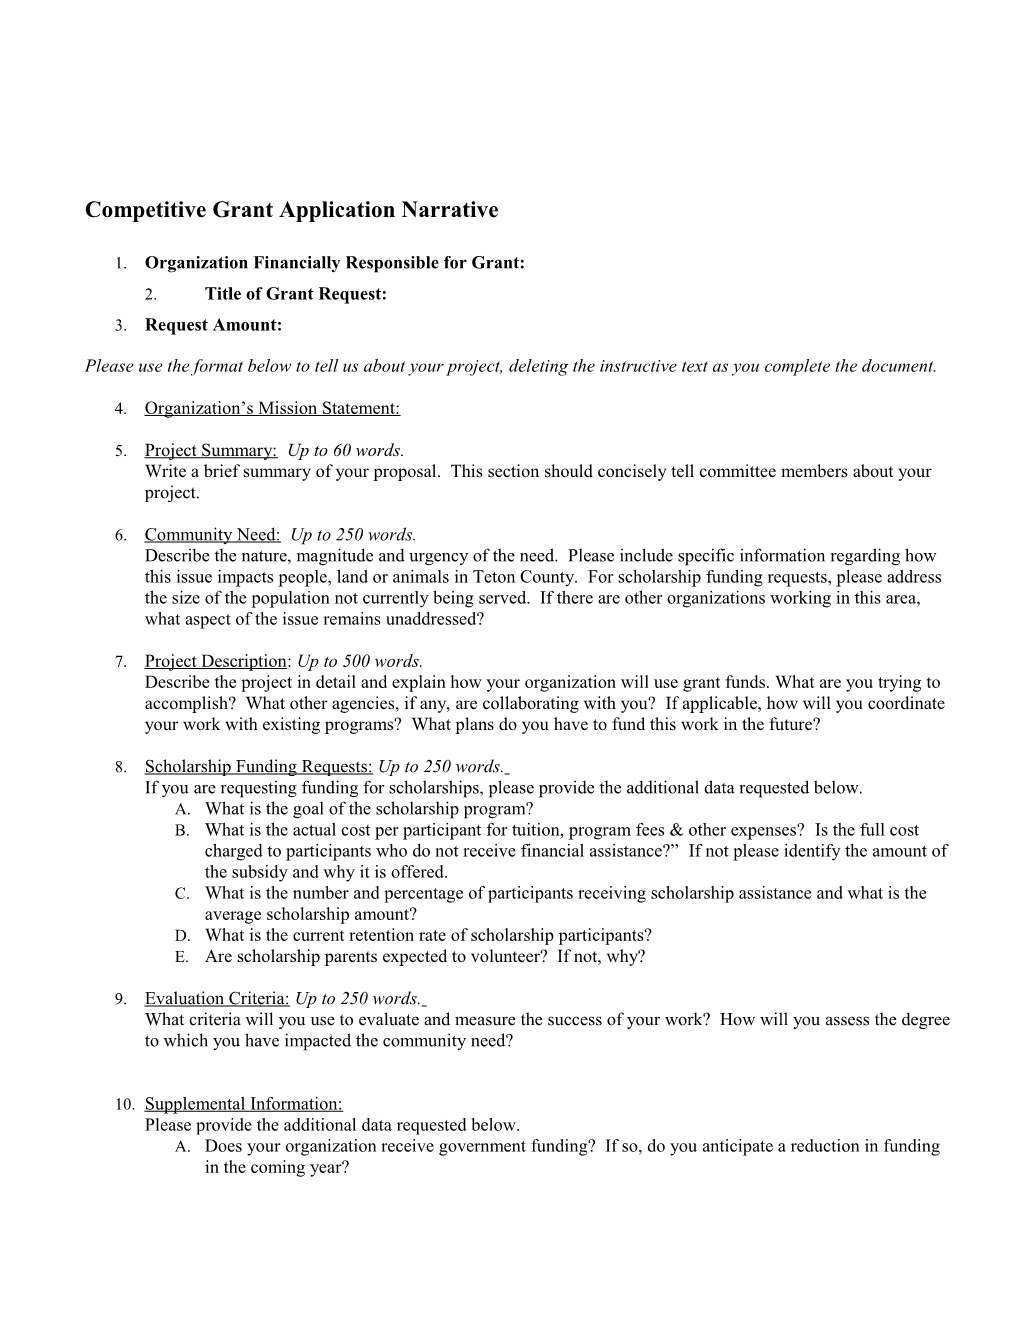 Competitive Grant Application Narrative